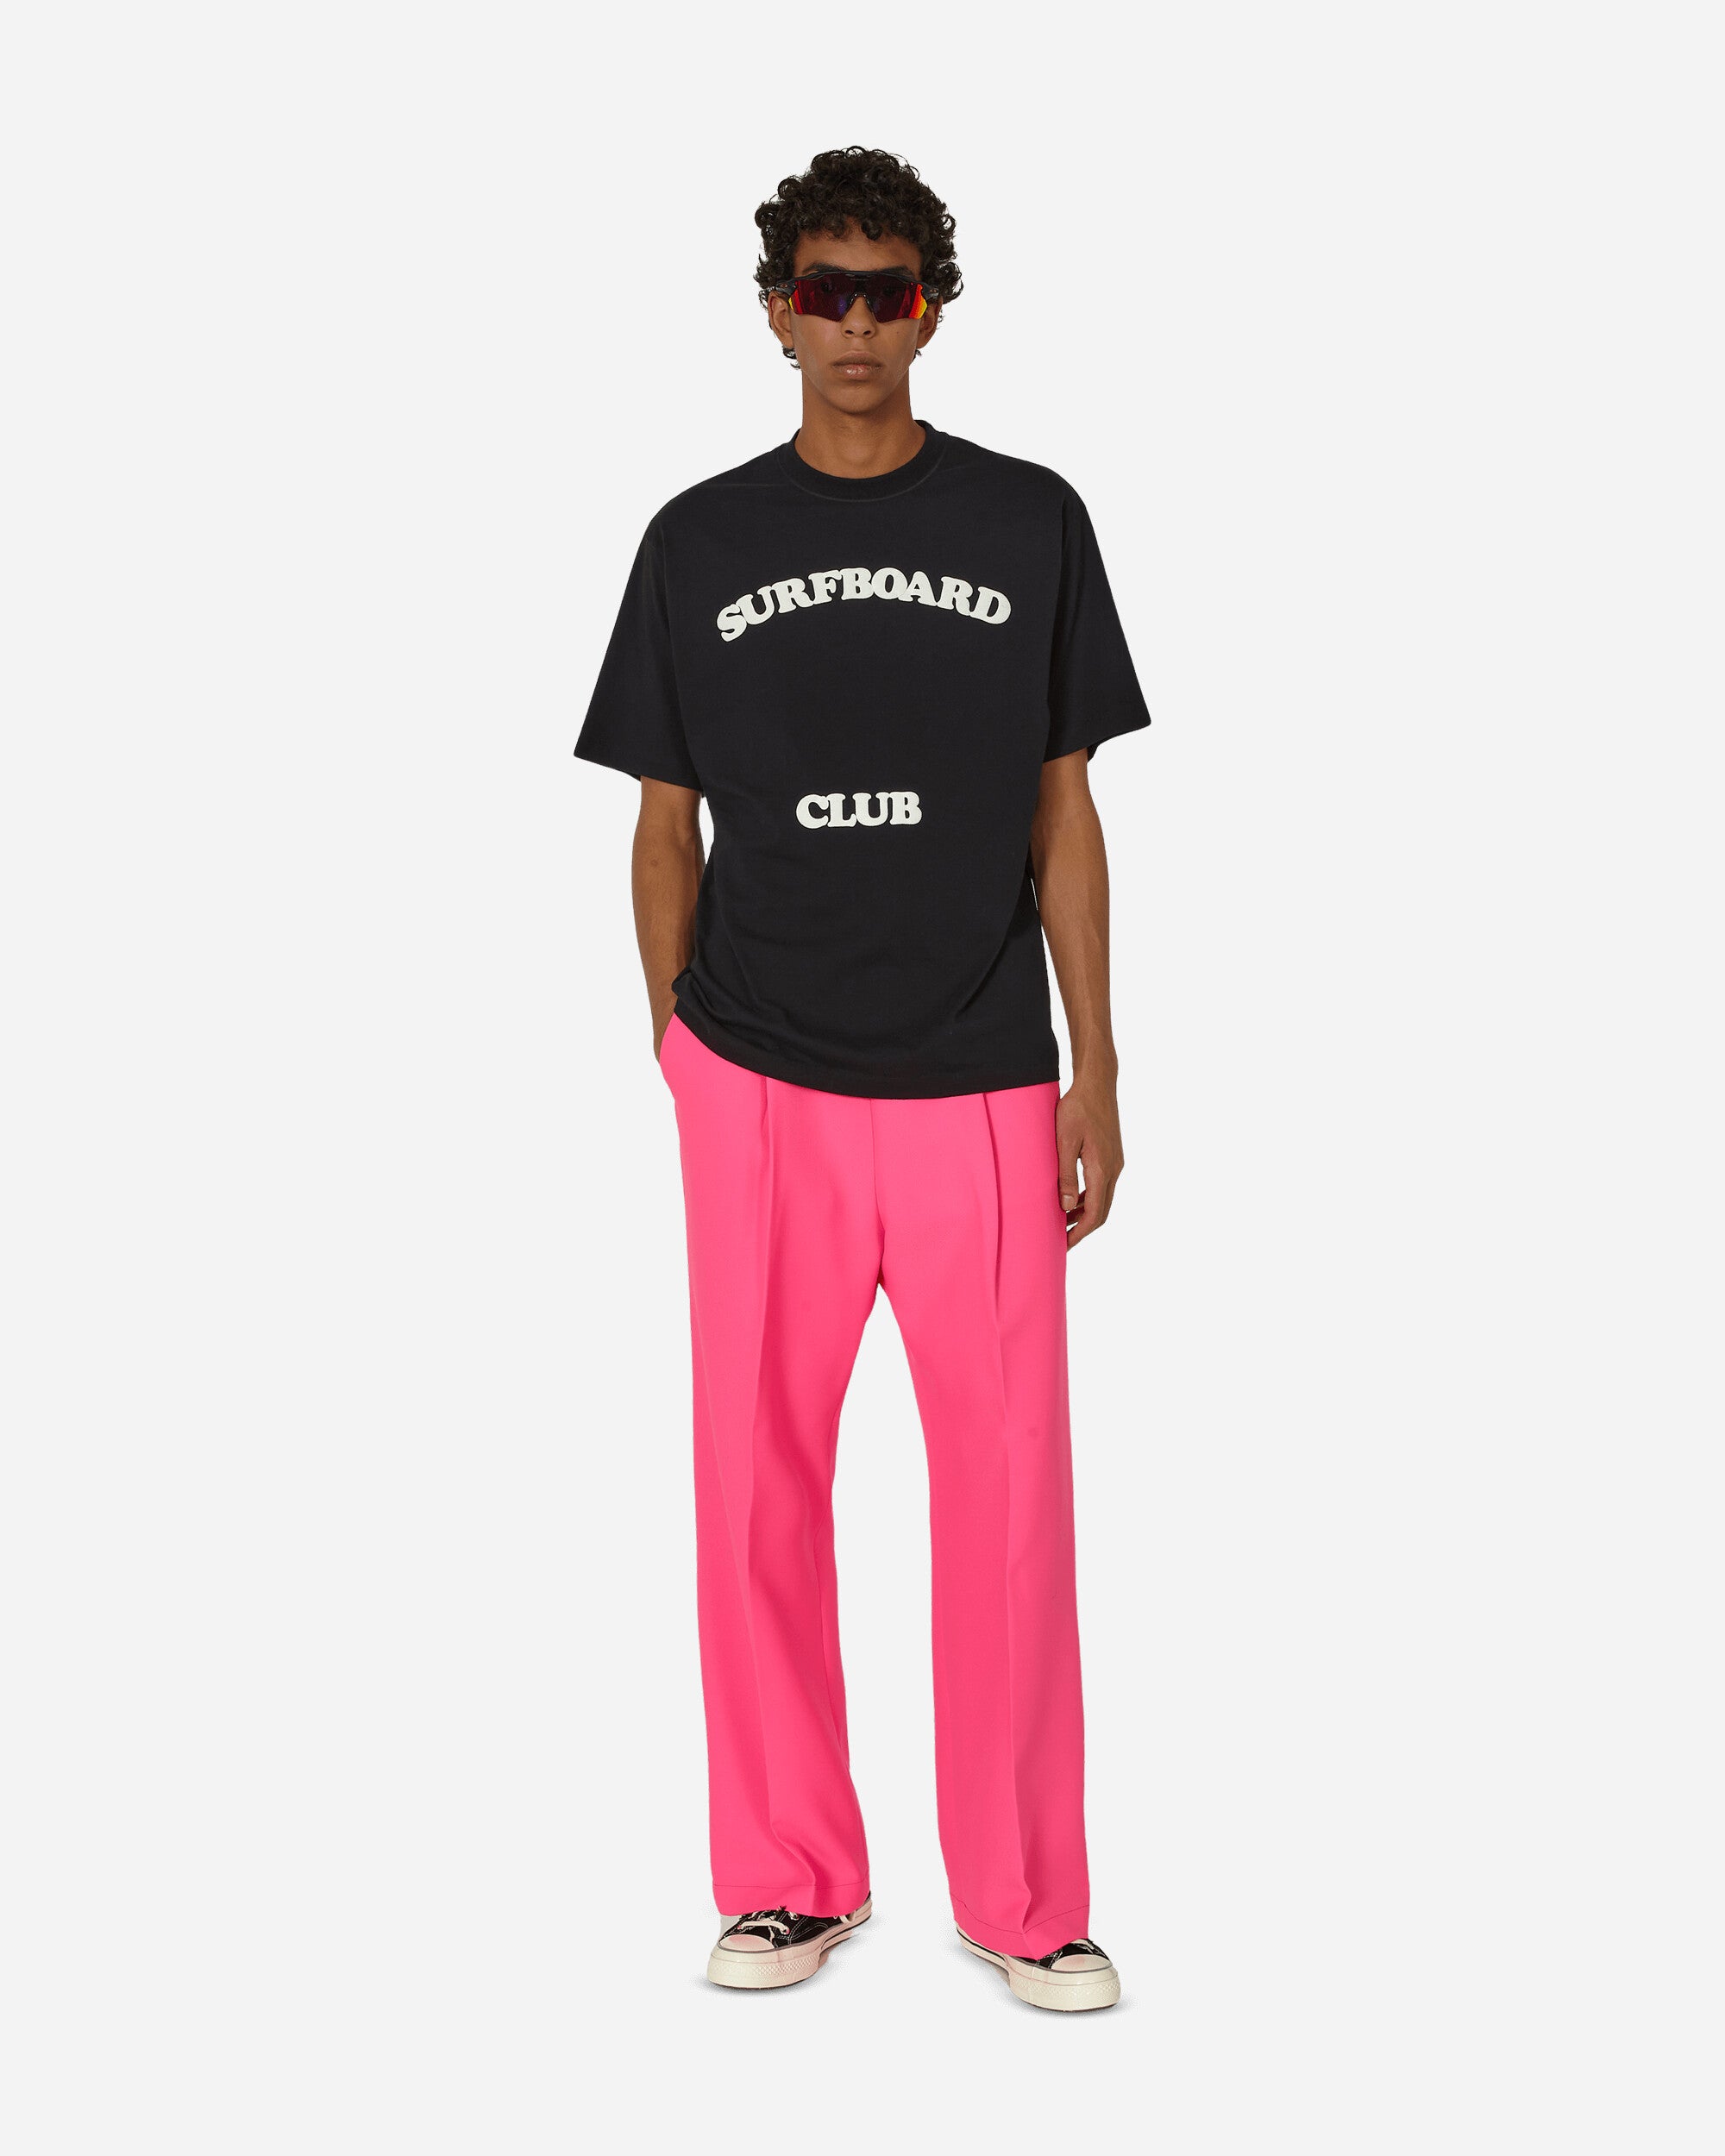 Stockholm (Surfboard) Club Elaine Flou Pink Pants Trousers EW5FP3 001